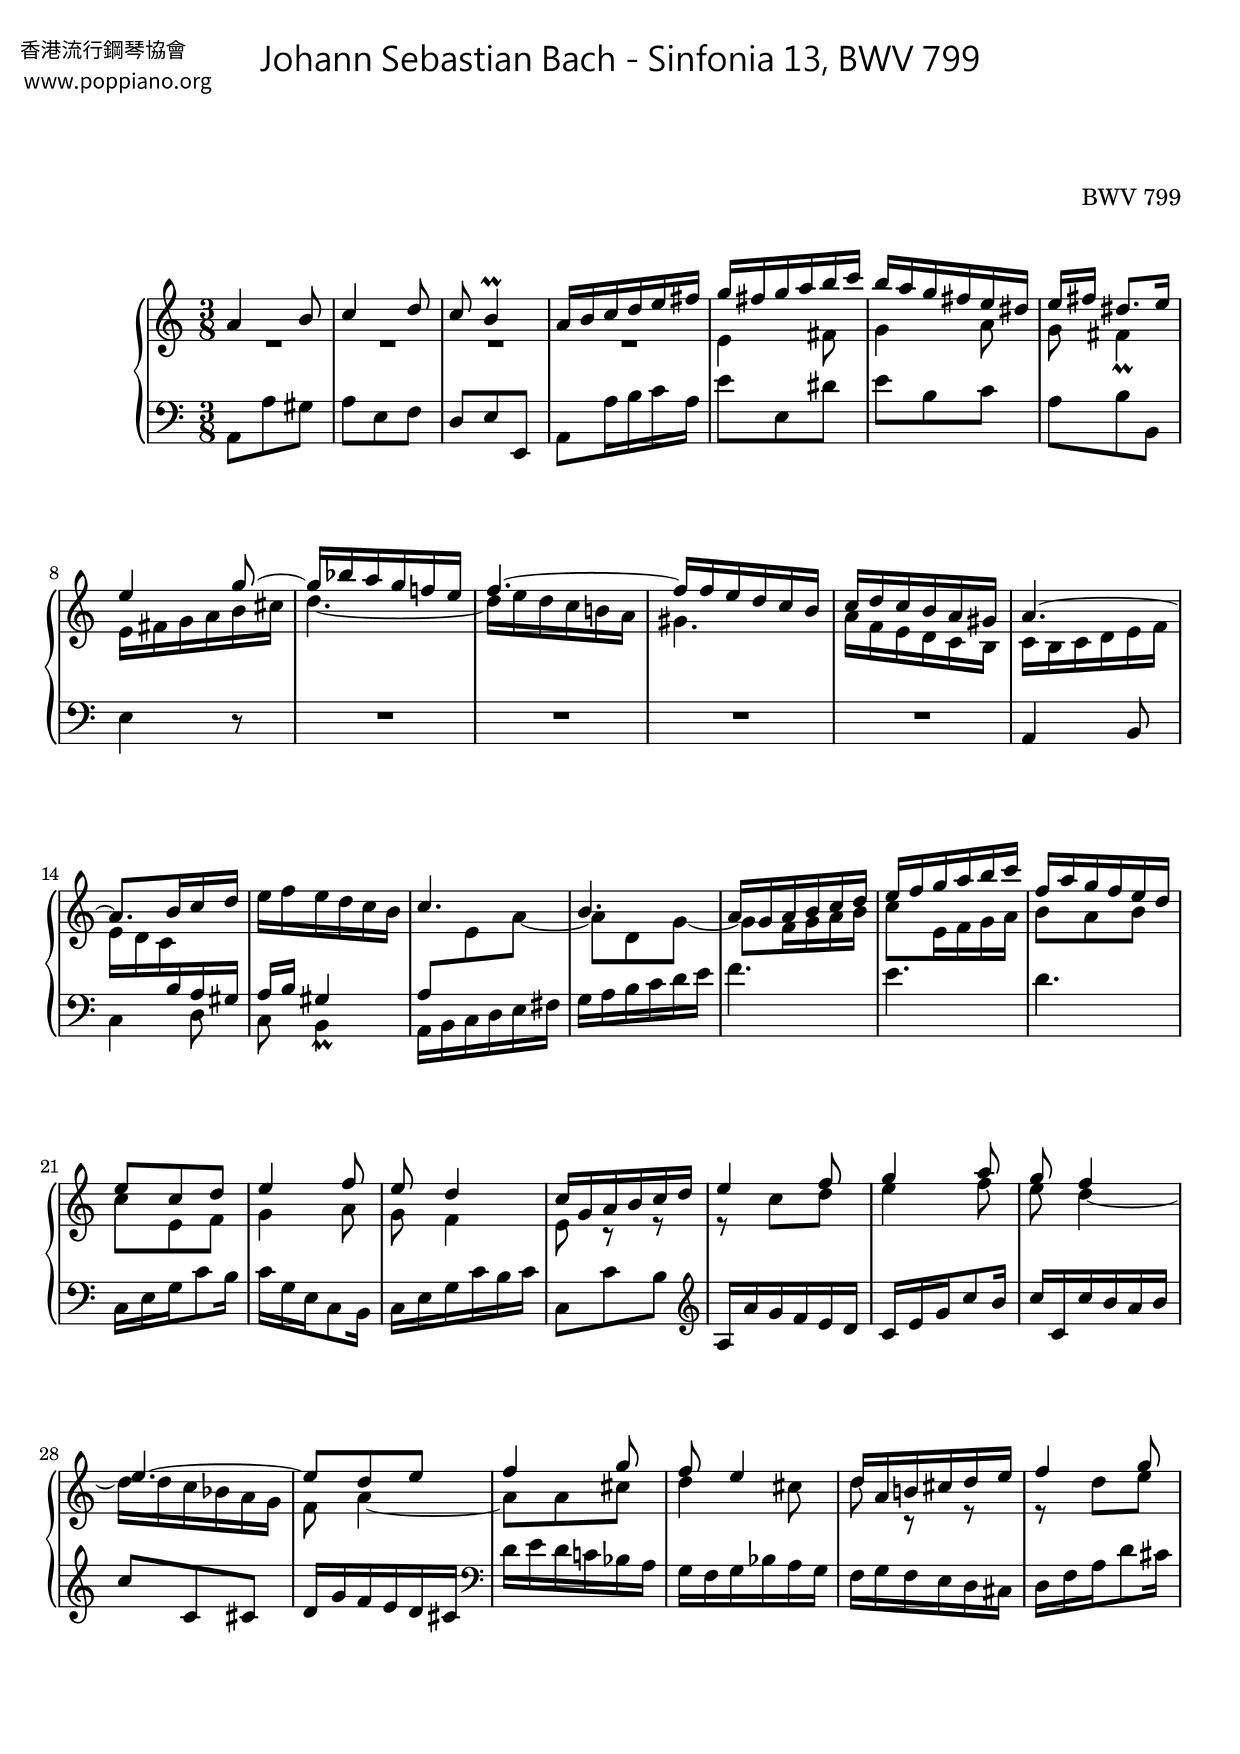 Sinfonia 13, BWV 799 Score